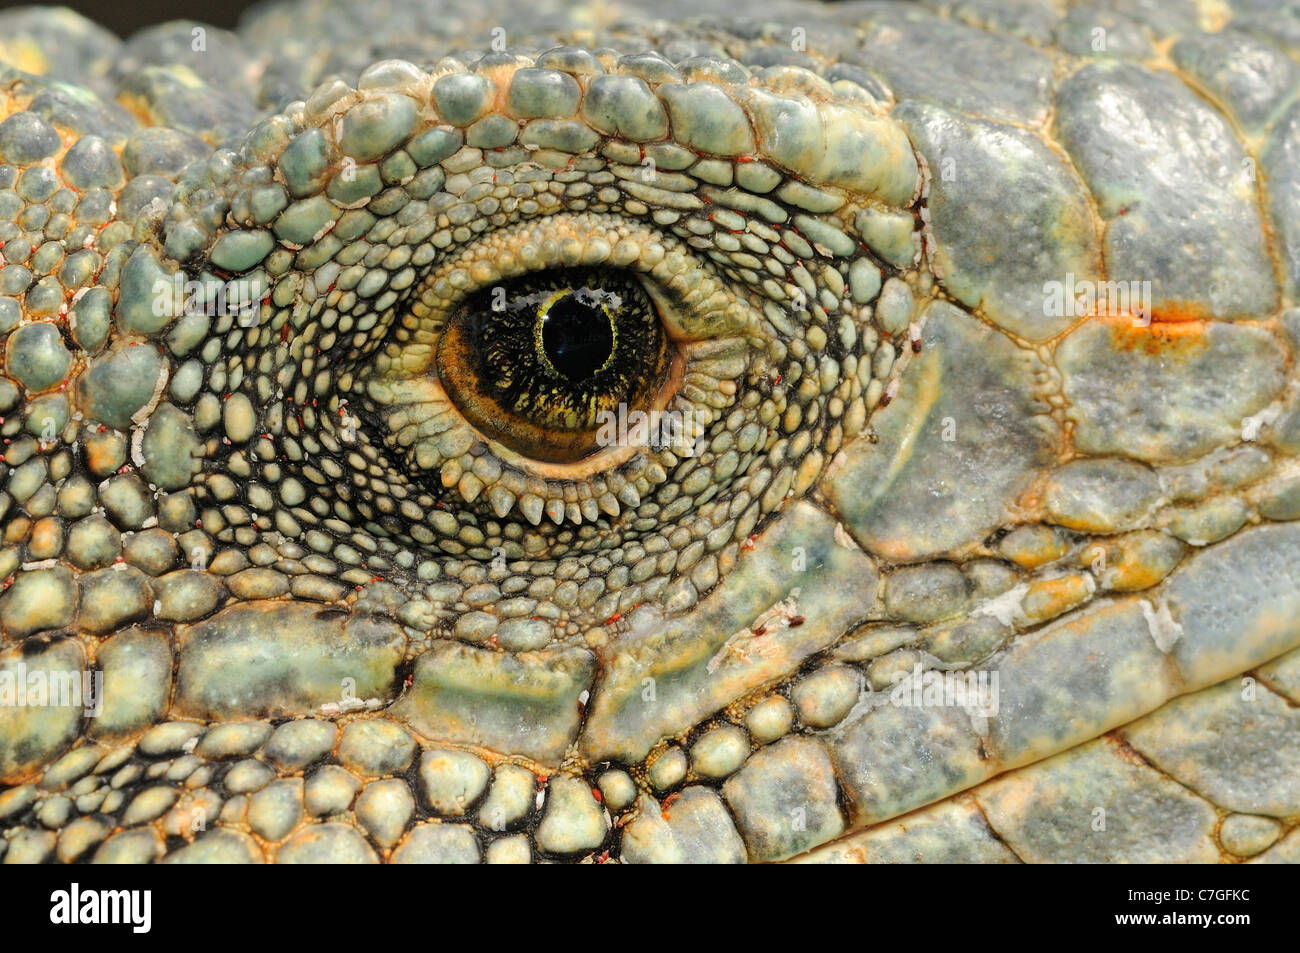 Iguana (Iguana iguana) close up of face and eye, Parque Bolivar, Guayaquil, Ecuador Stock Photo